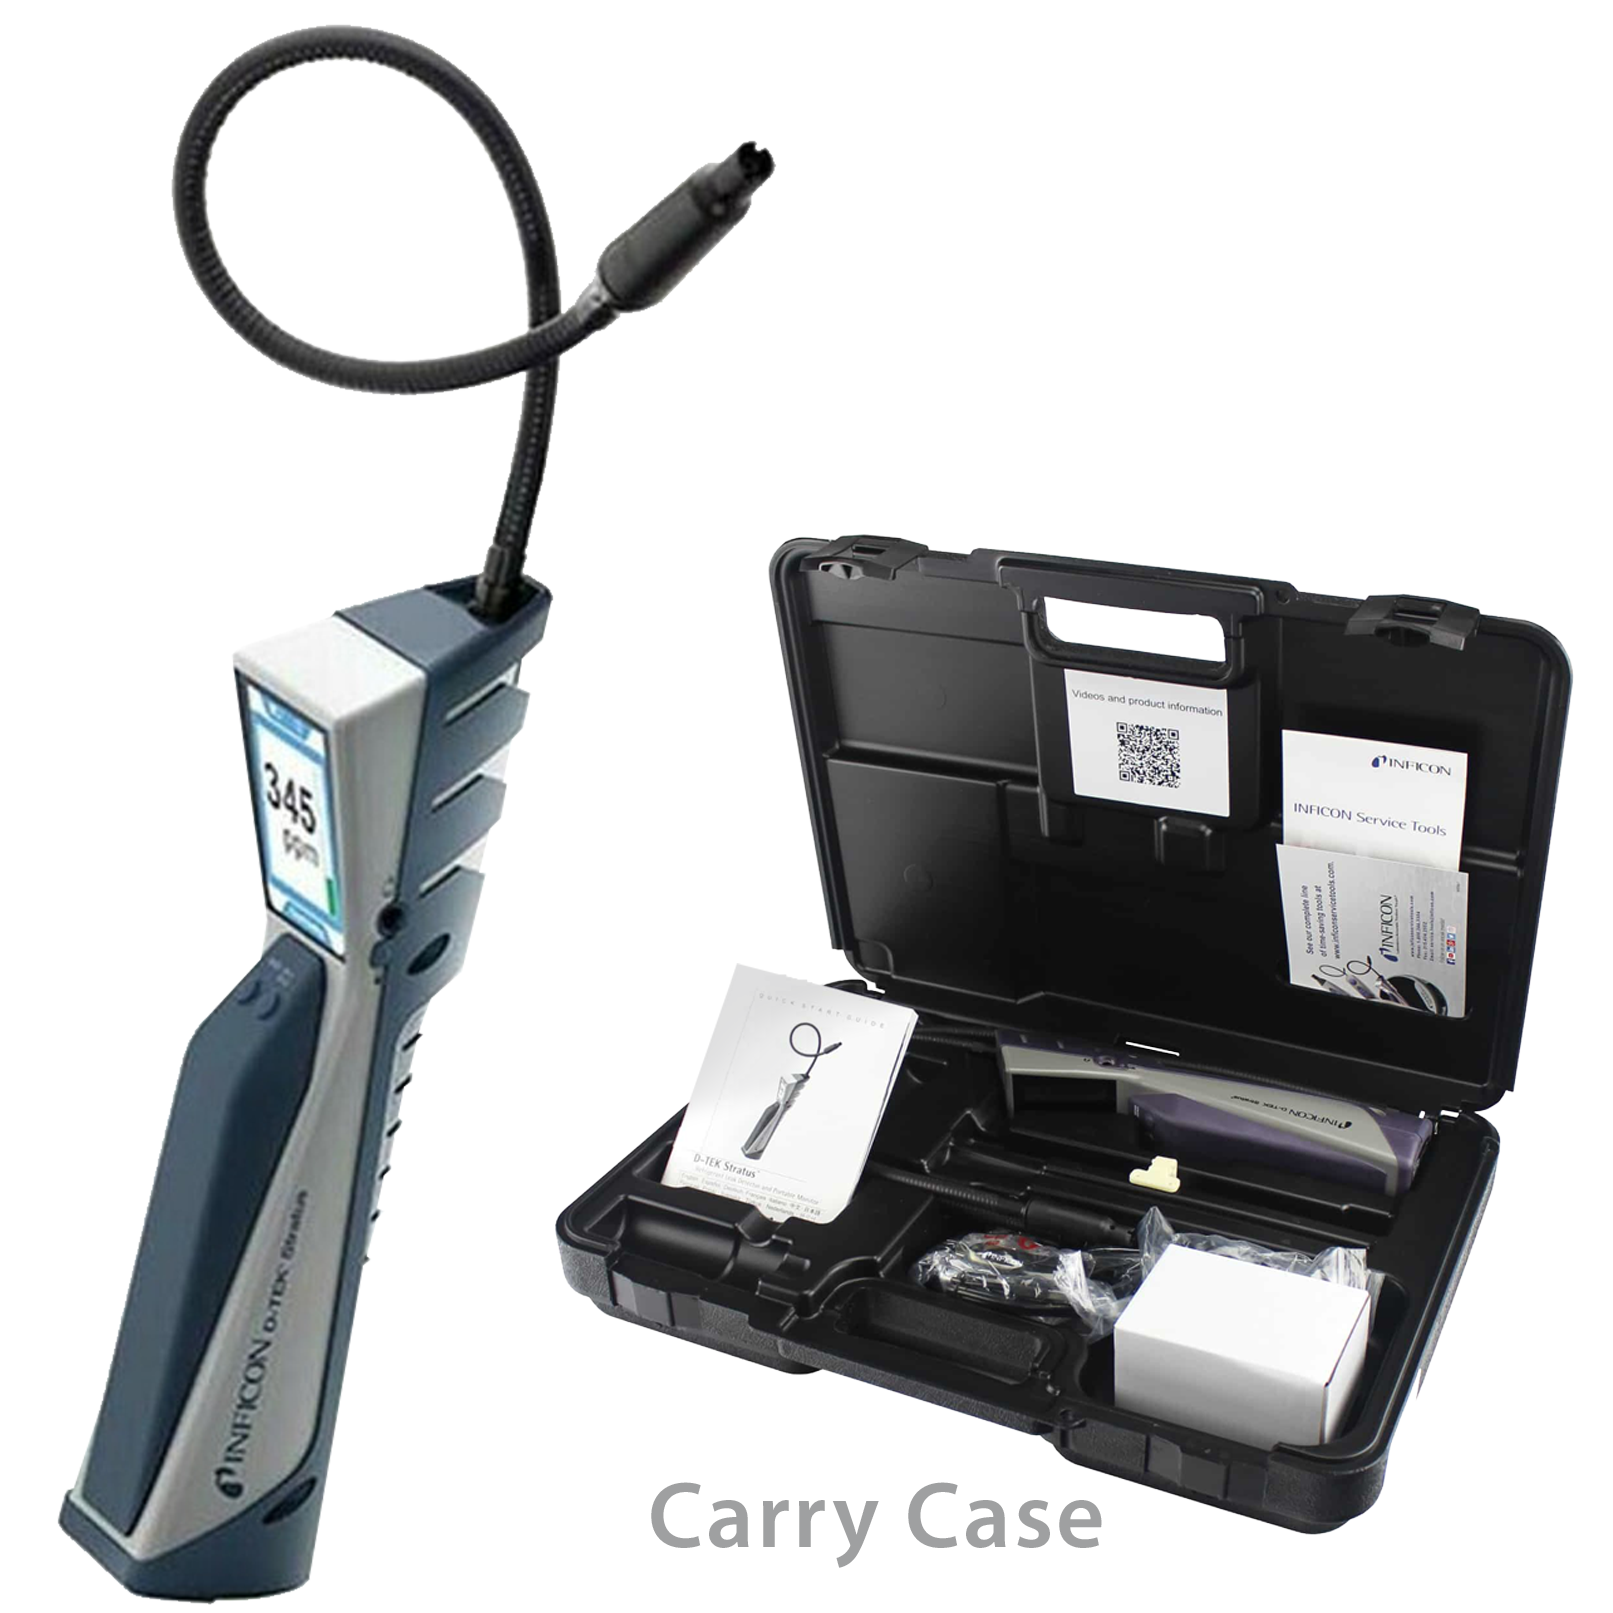 D-Tek Stratus® Leak Detector + Carry Case (724202G11)